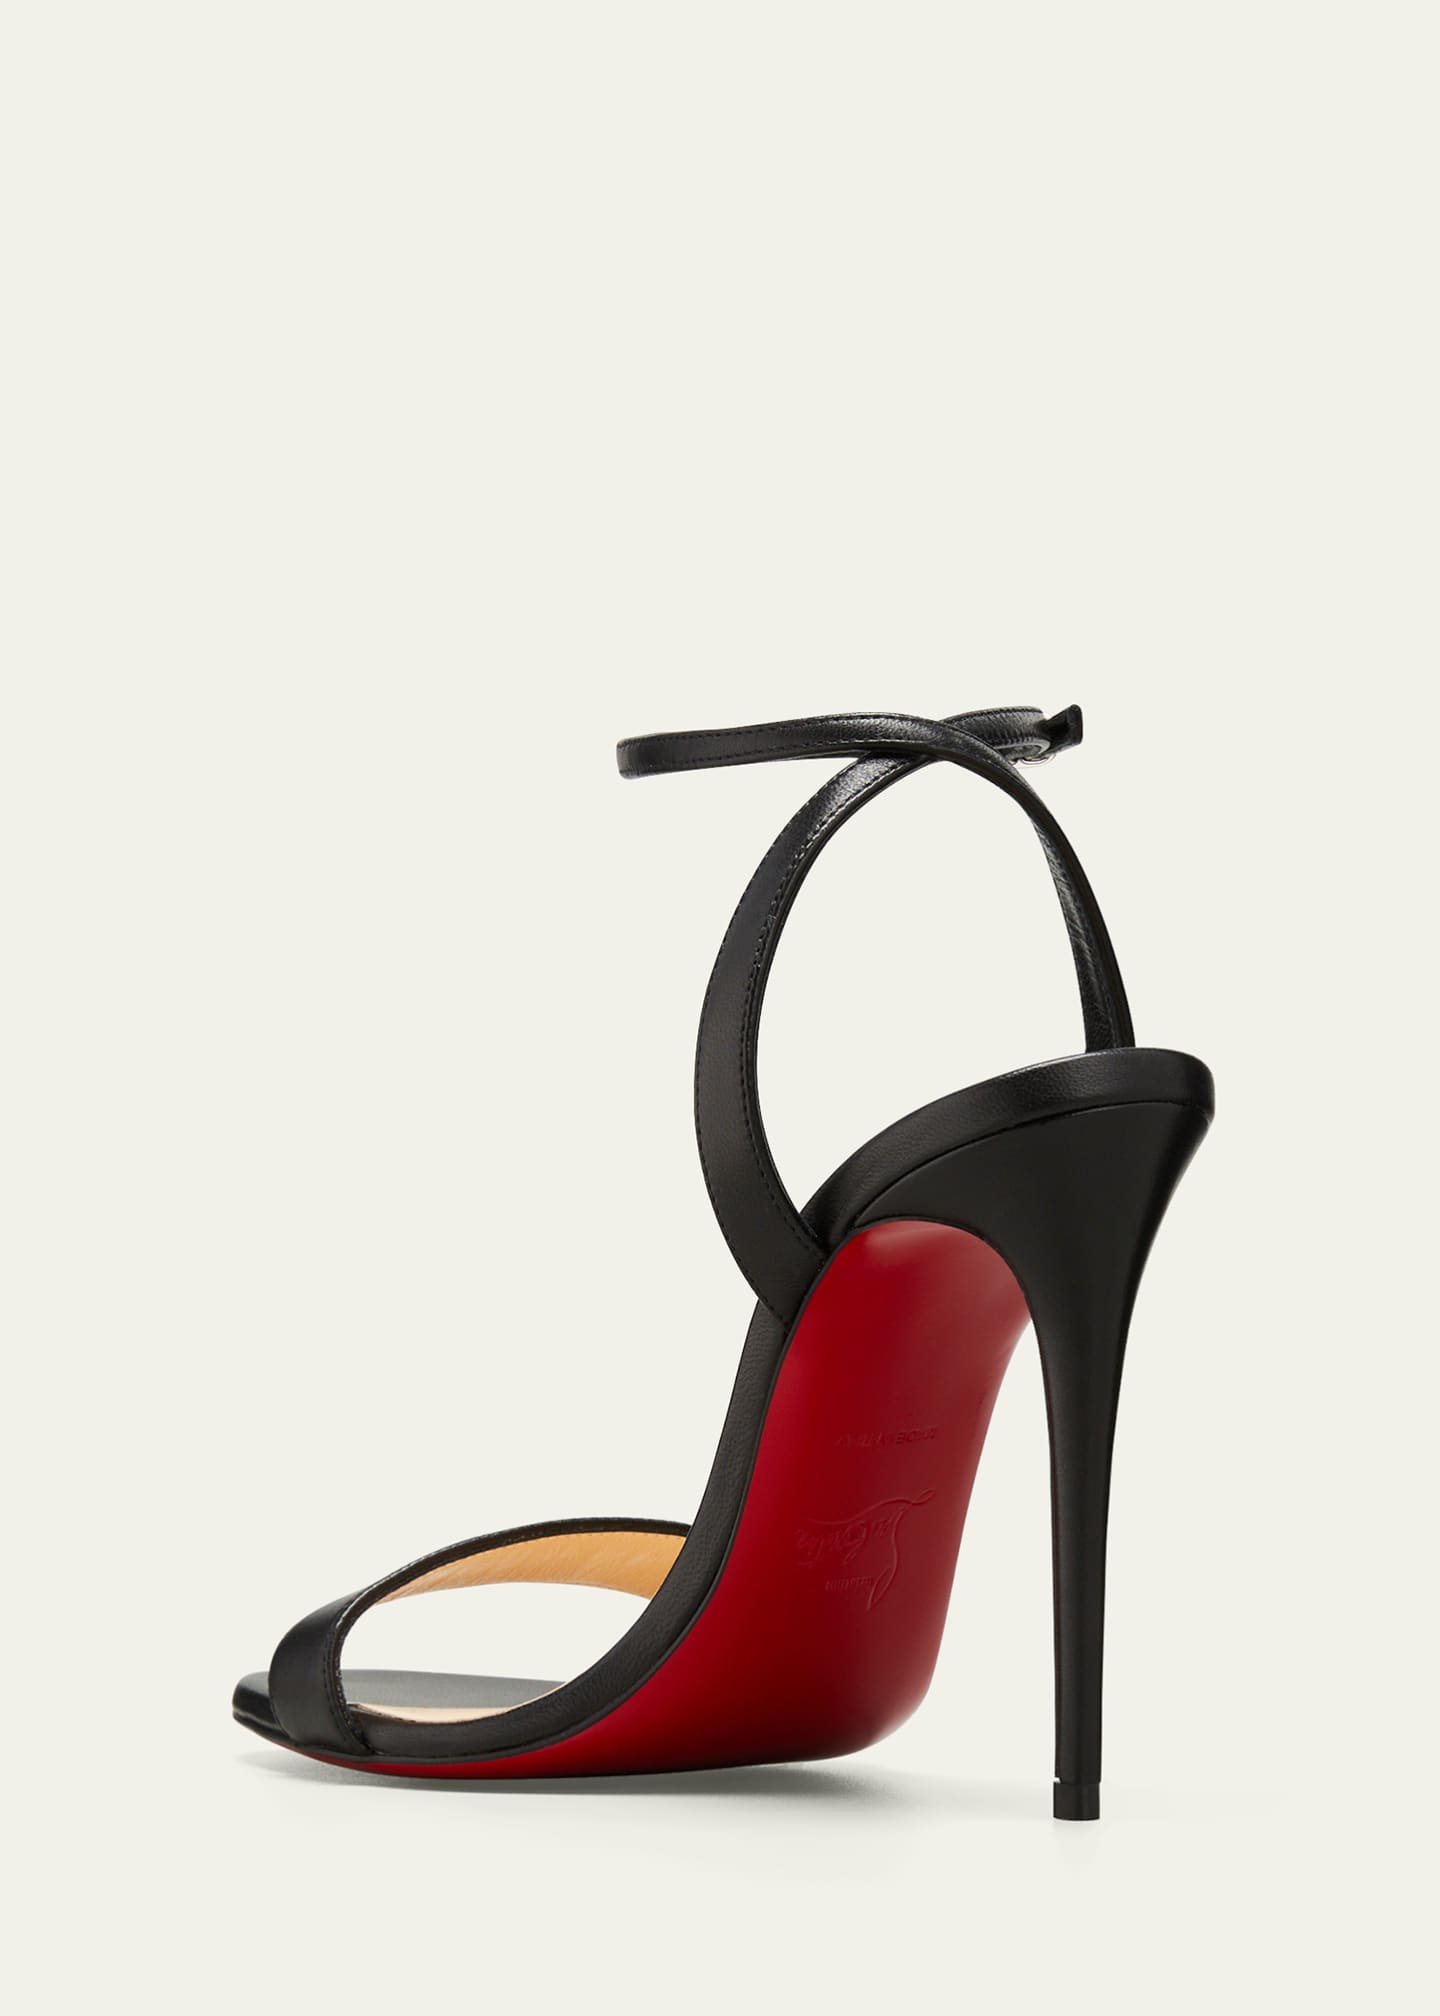 Christian Louboutin sandals for Women